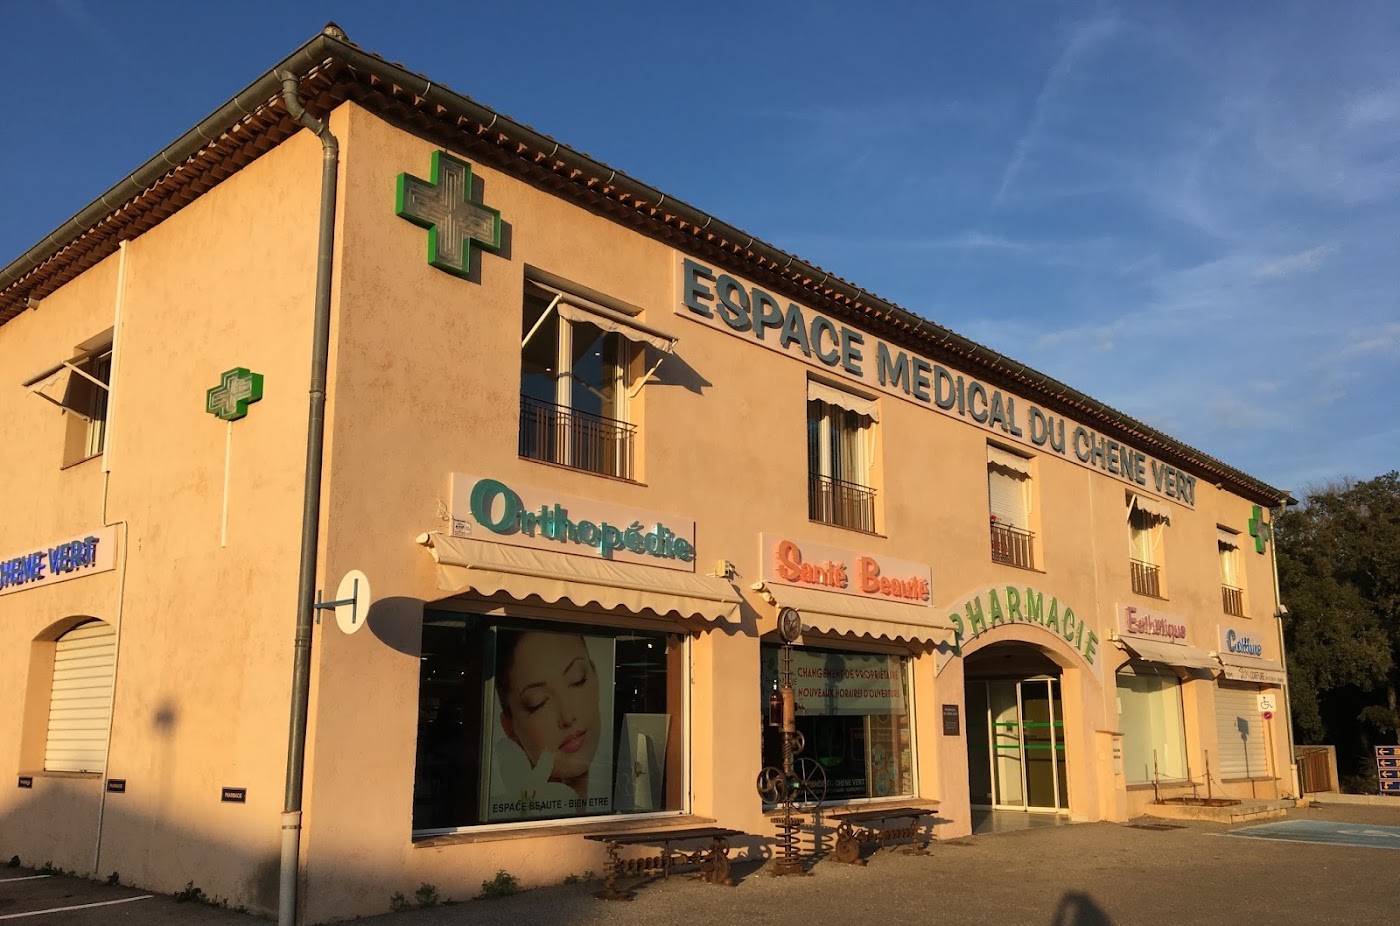 Pharmacie Du Chêne Vert